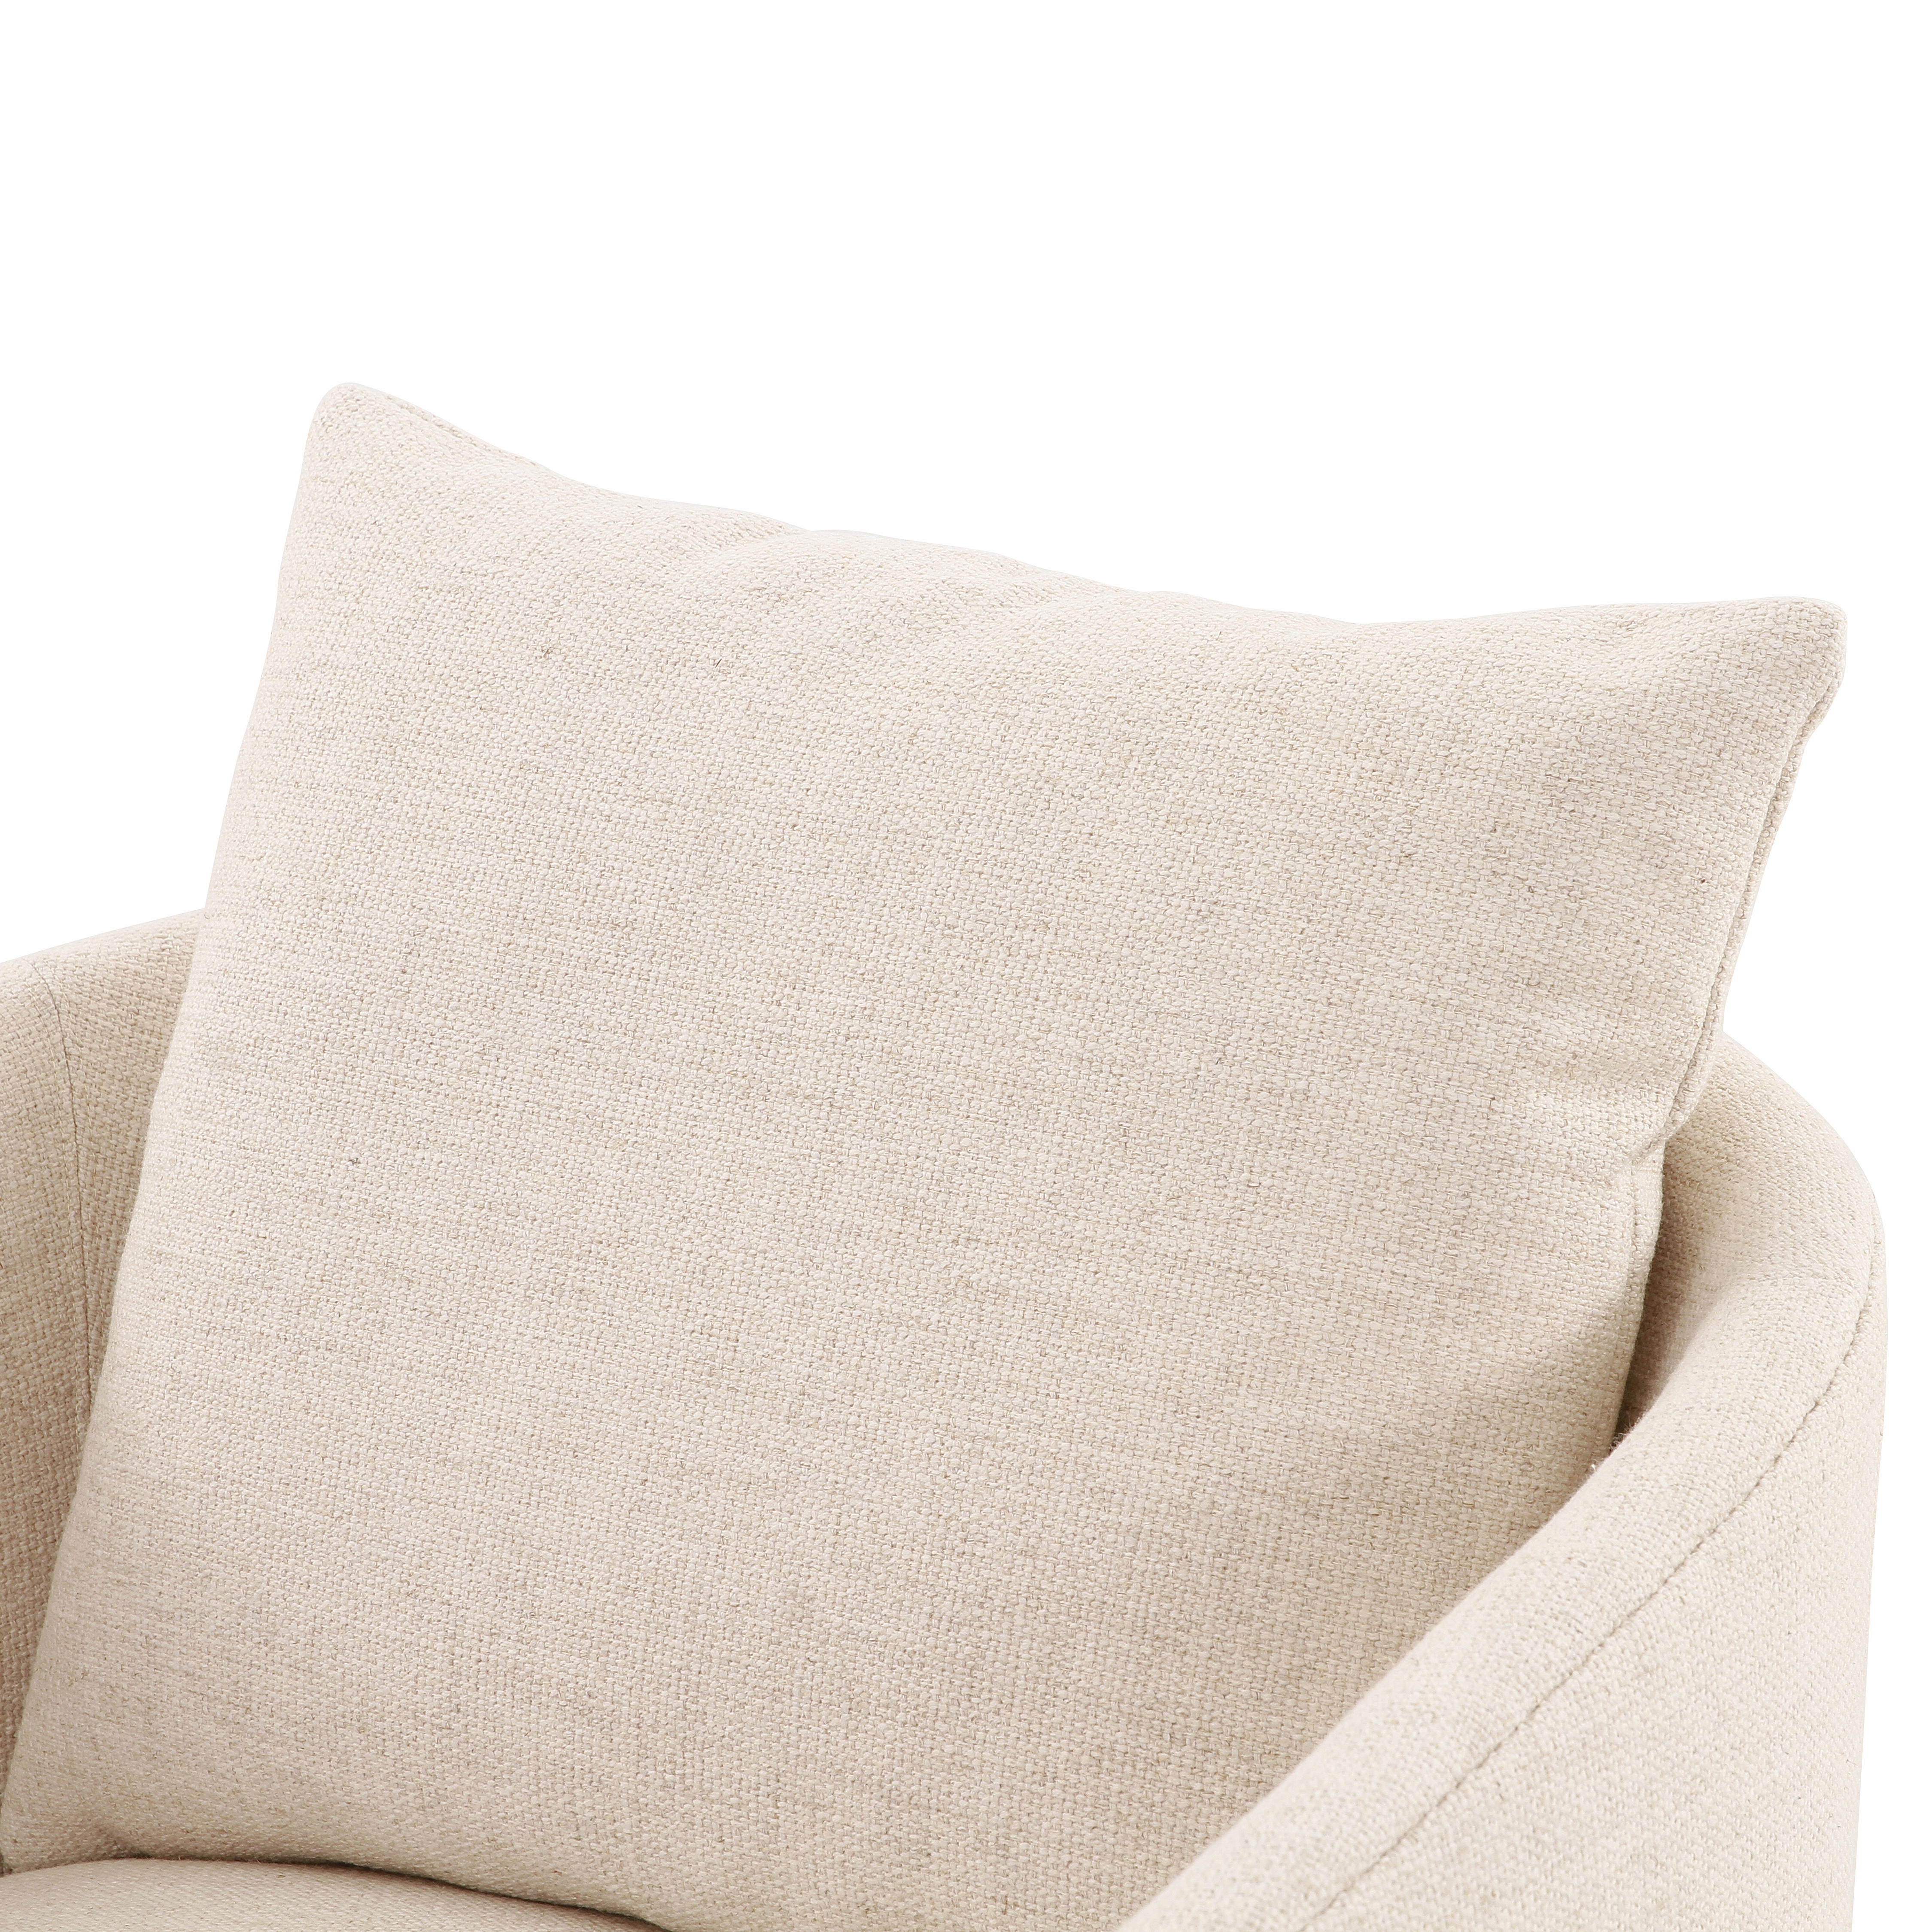 Copeland Chair-Thames Cream - Image 2